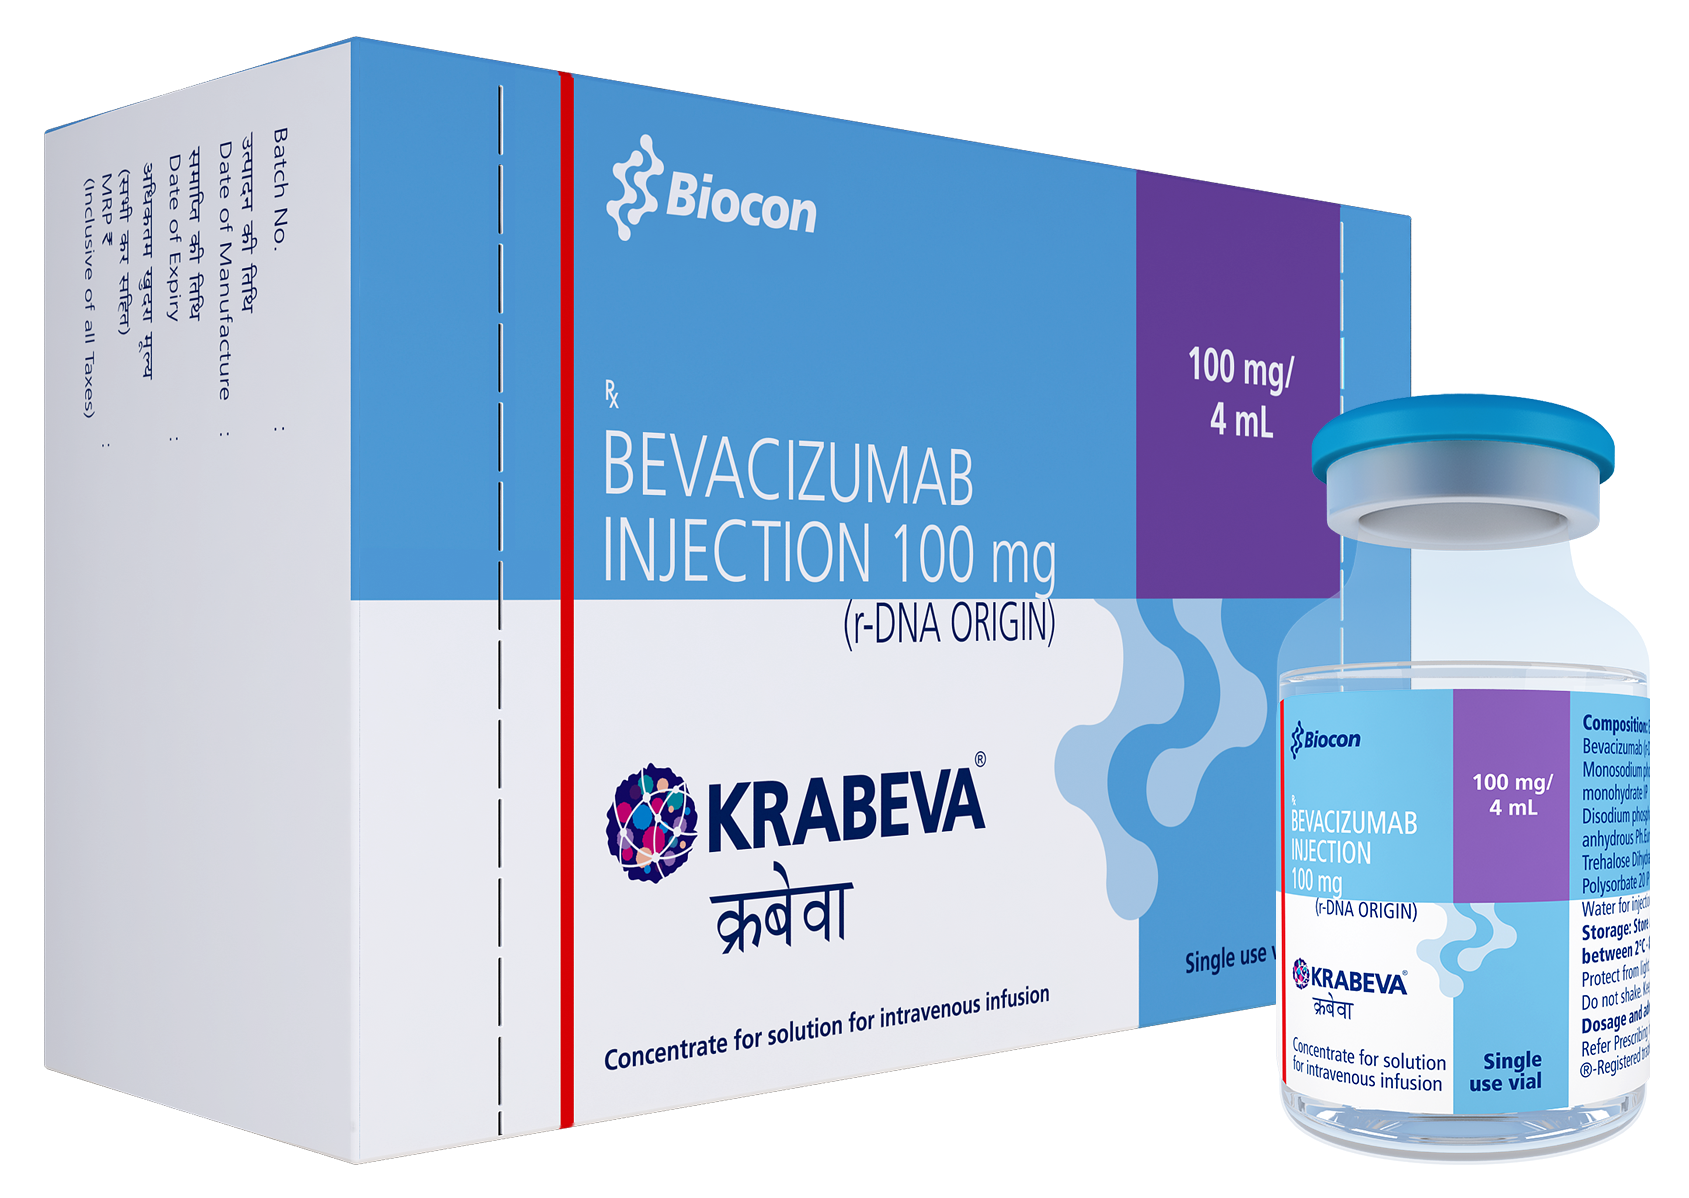 Biocon launches its biosimilar Bevacizumab in India